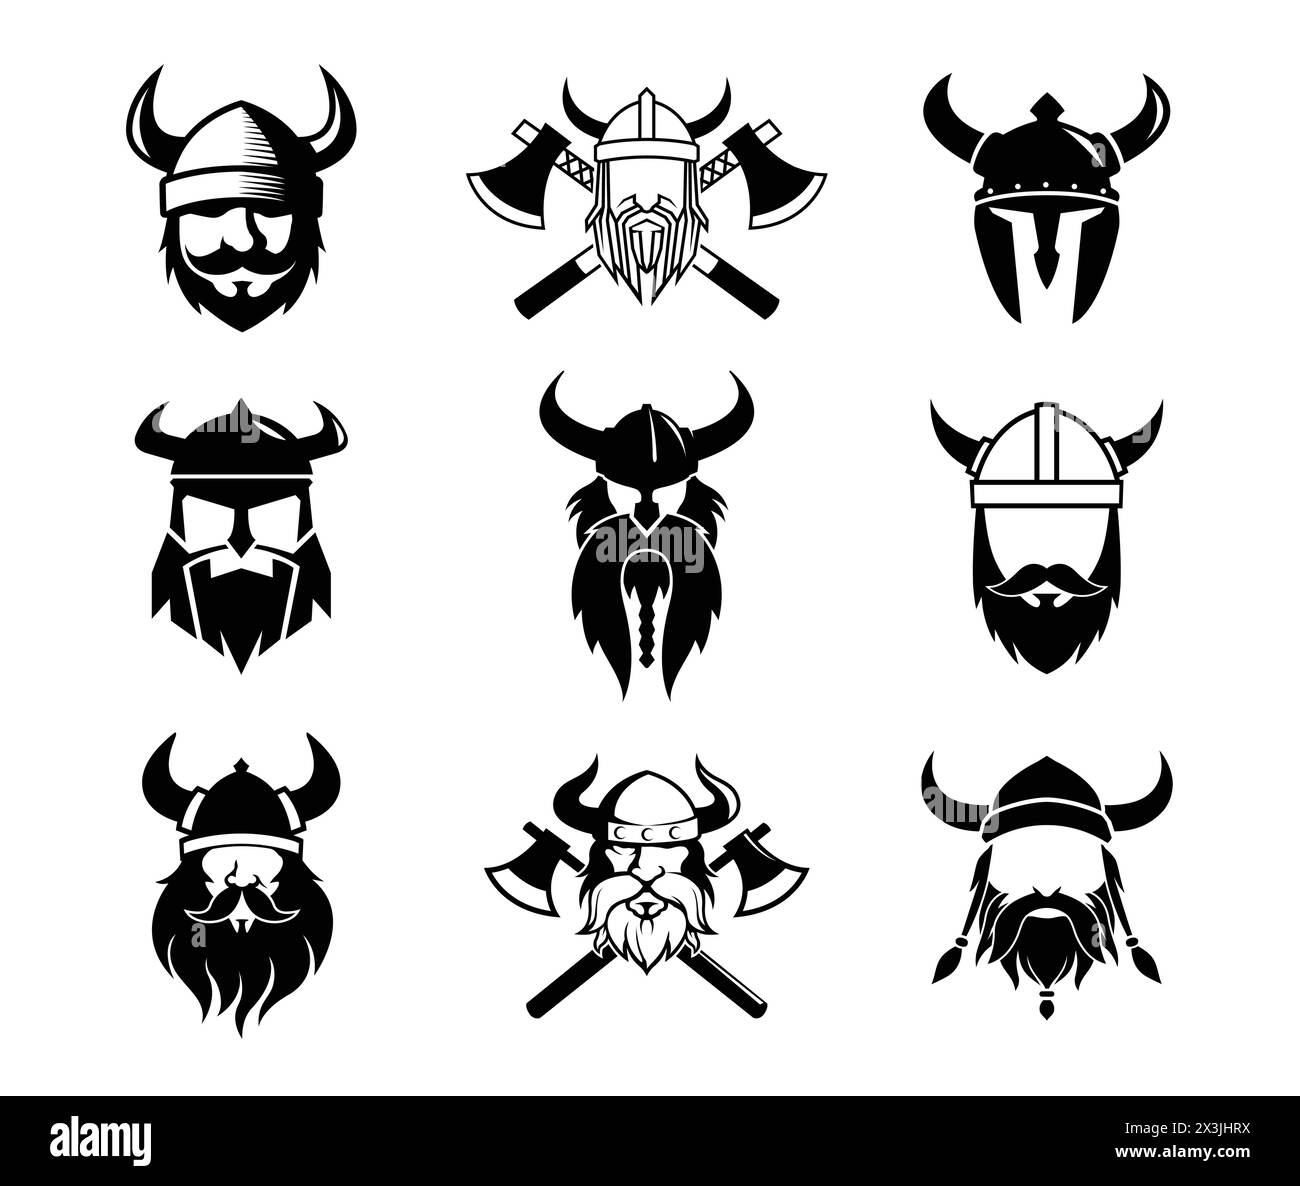 Creative Warrior Viking Head Helmet Collection Set logo Design symbole illustration vectorielle Illustration de Vecteur